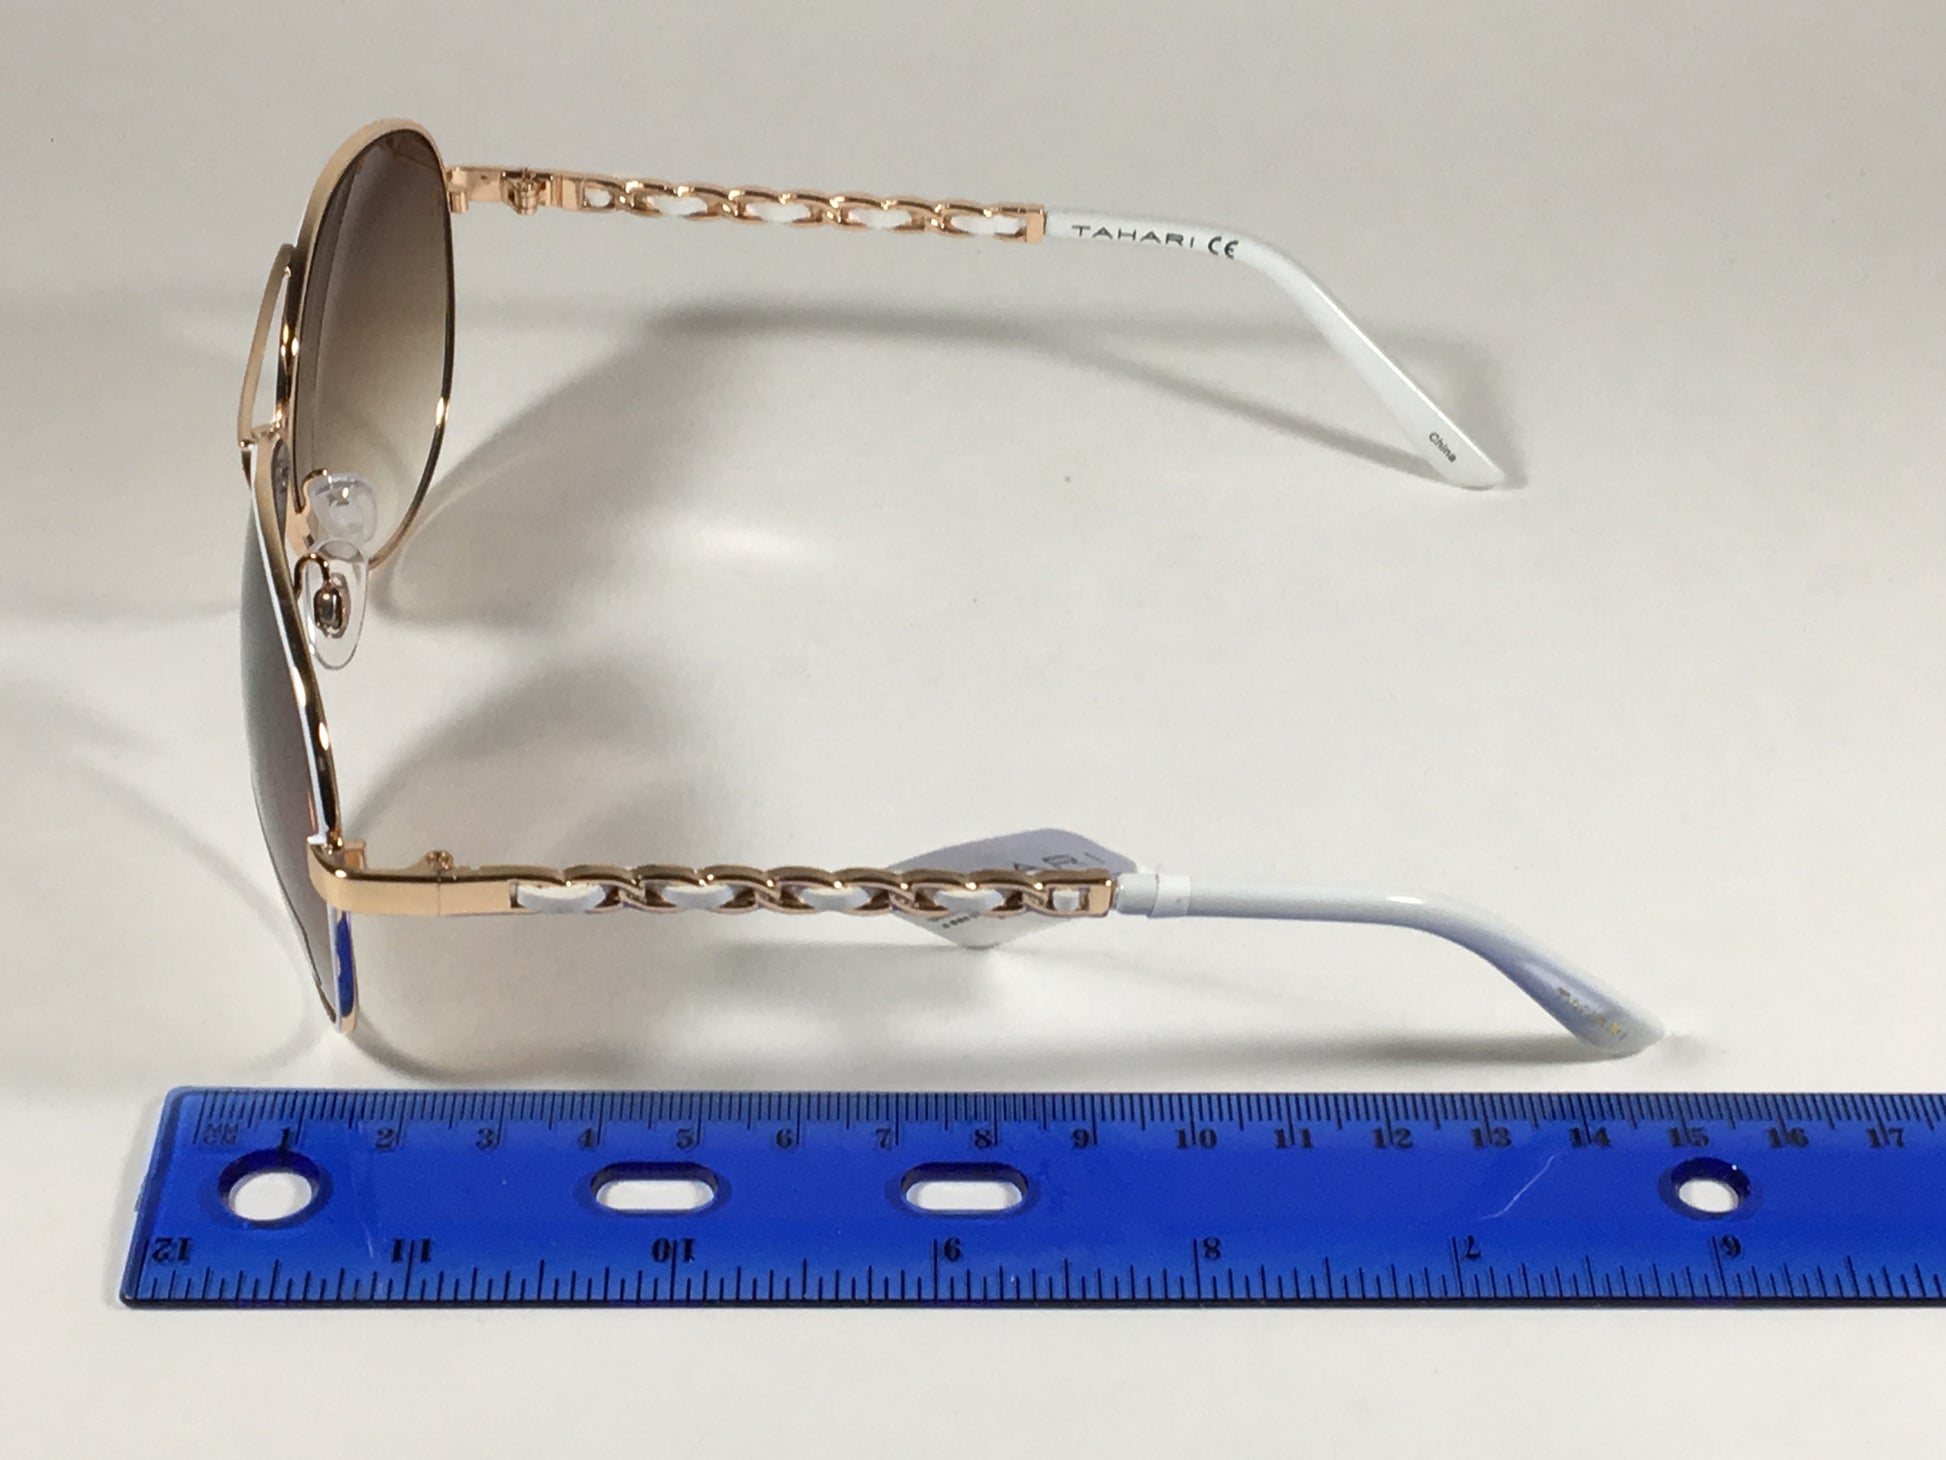 Tahari Aviator Sunglasses Rose Gold White Leather Chord Gradient Lens Th649 - Sunglasses